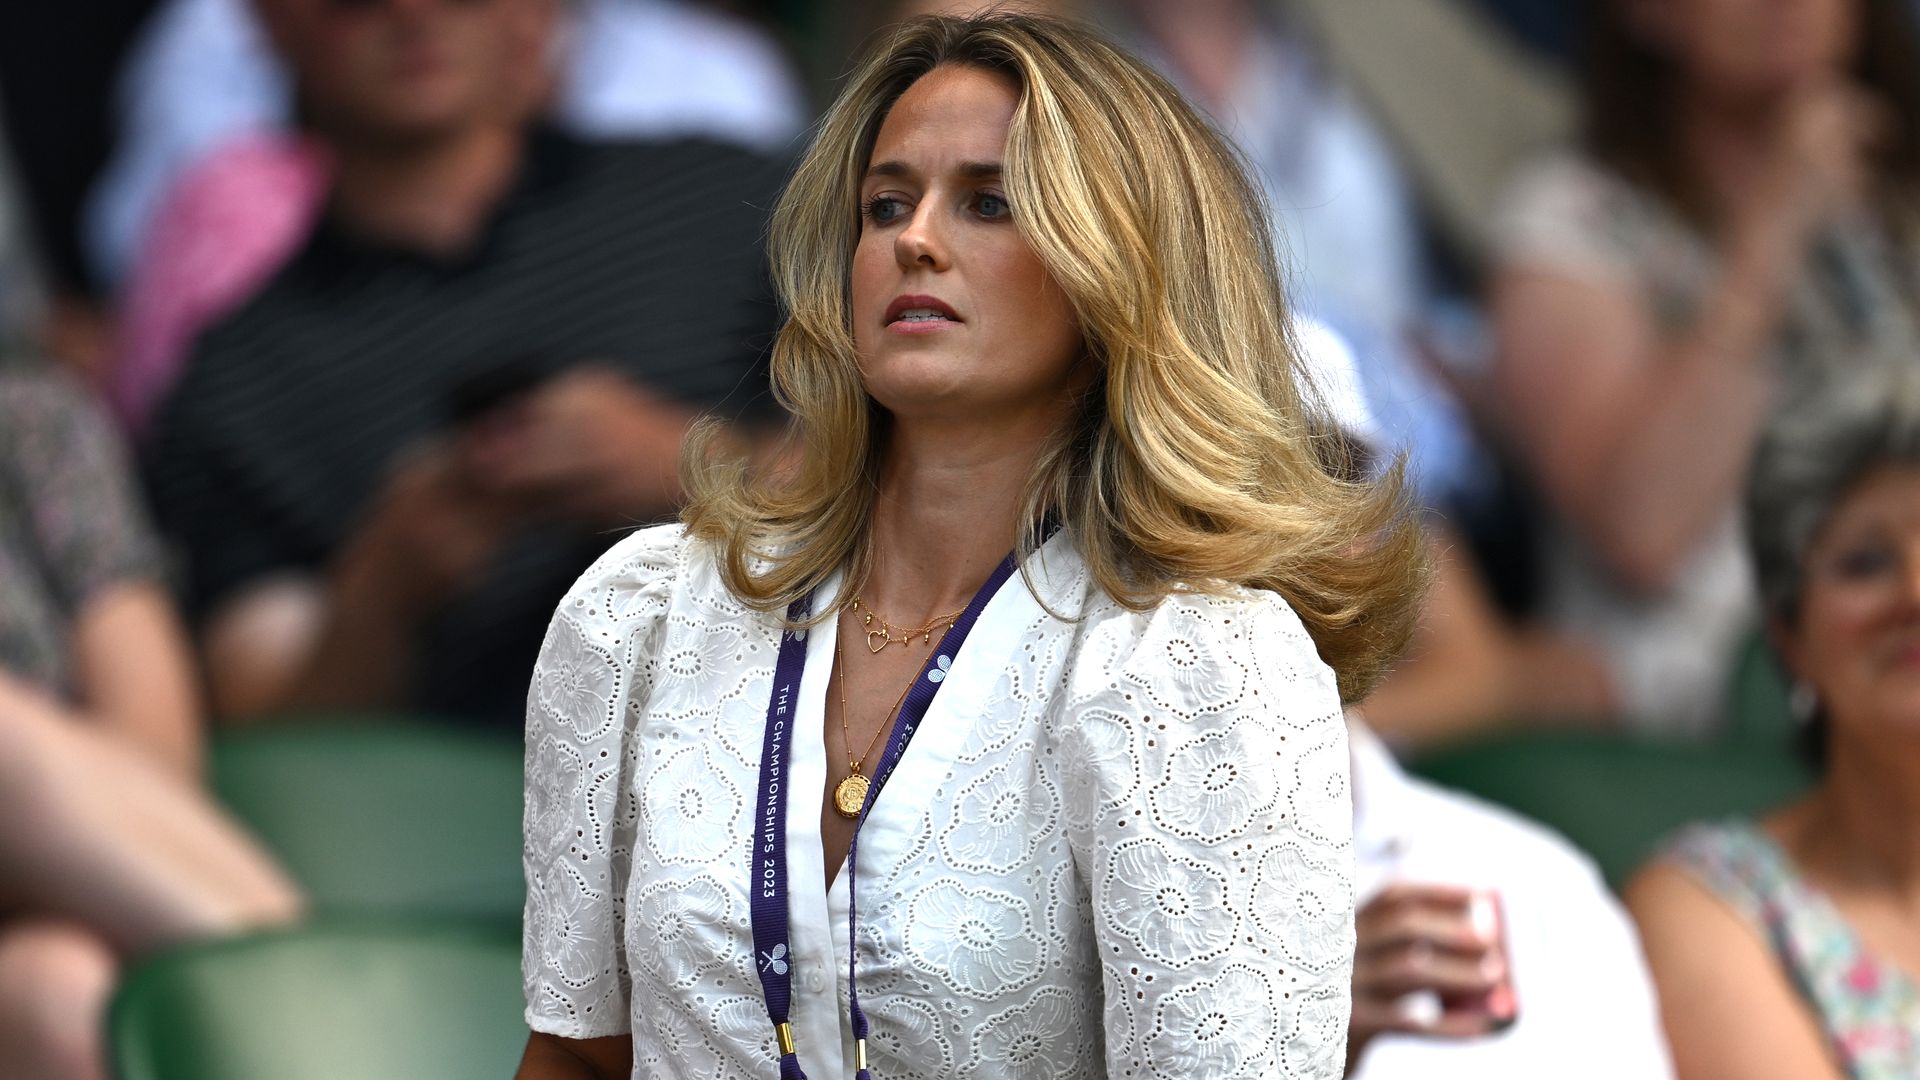 Kim Murray nails tennis chic in lacy white midi dress at Wimbledon